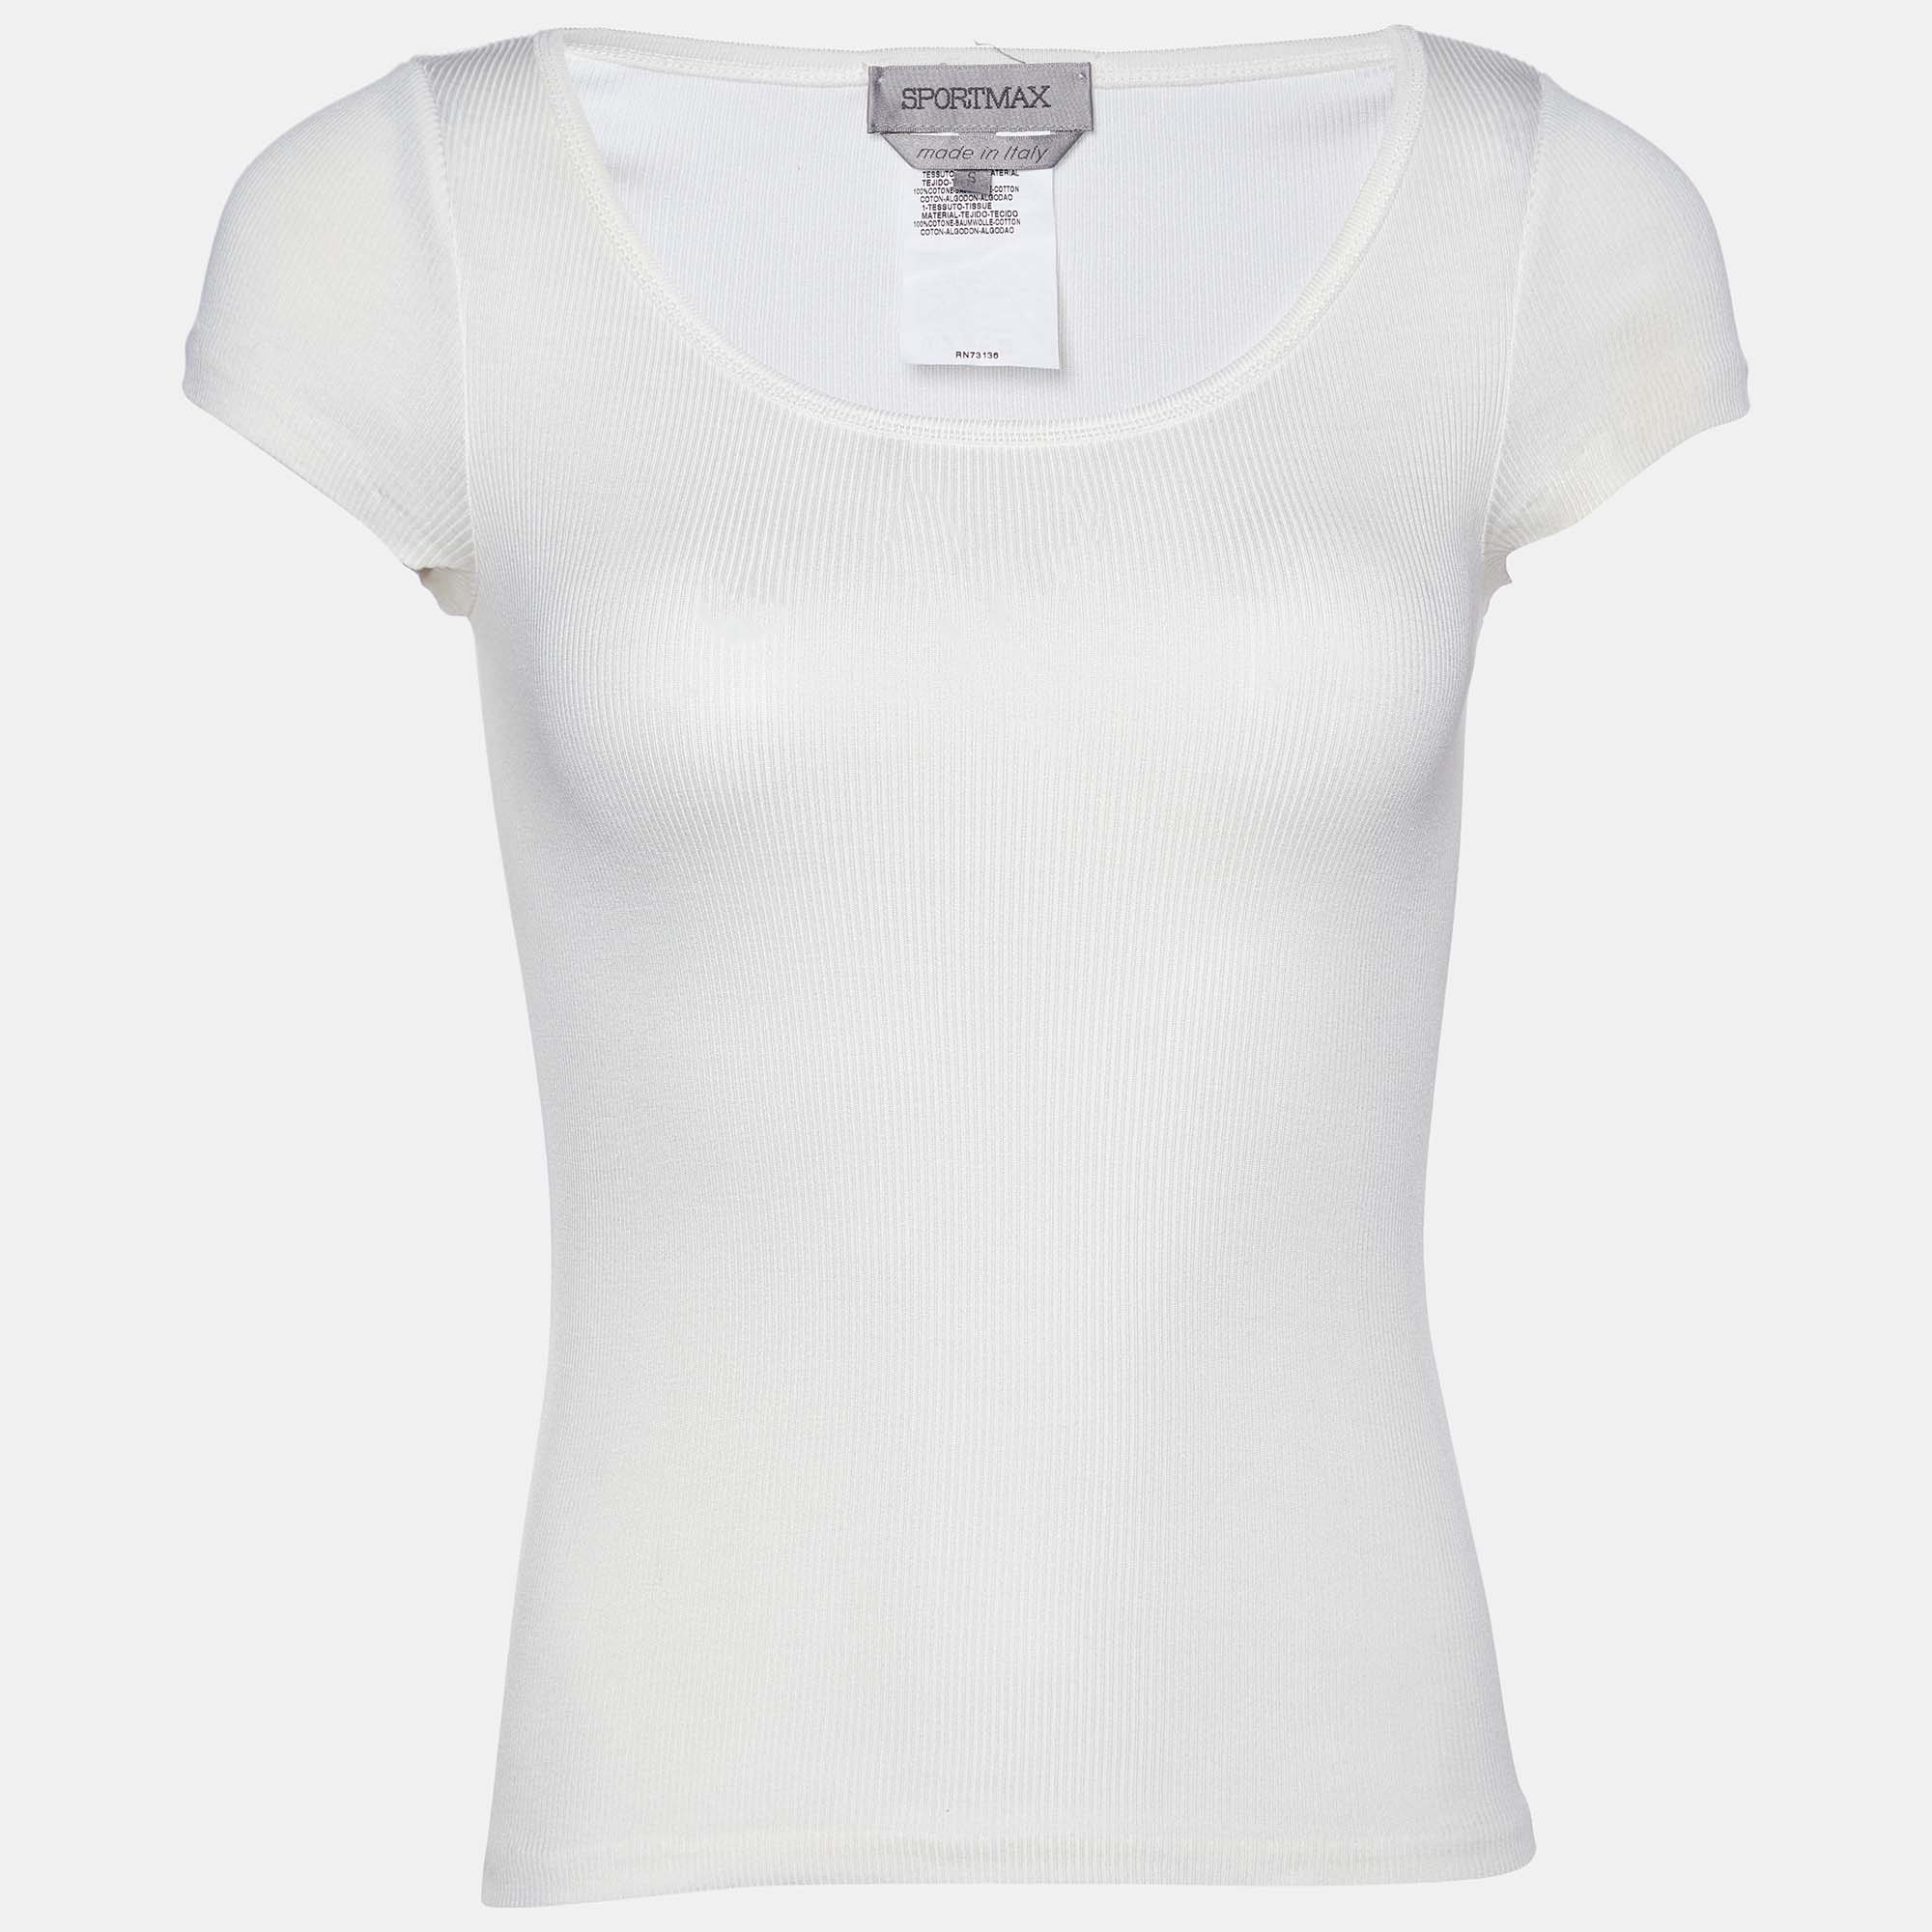 

Sportmax Off White Cotton Knit Short Sleeve T-Shirt S